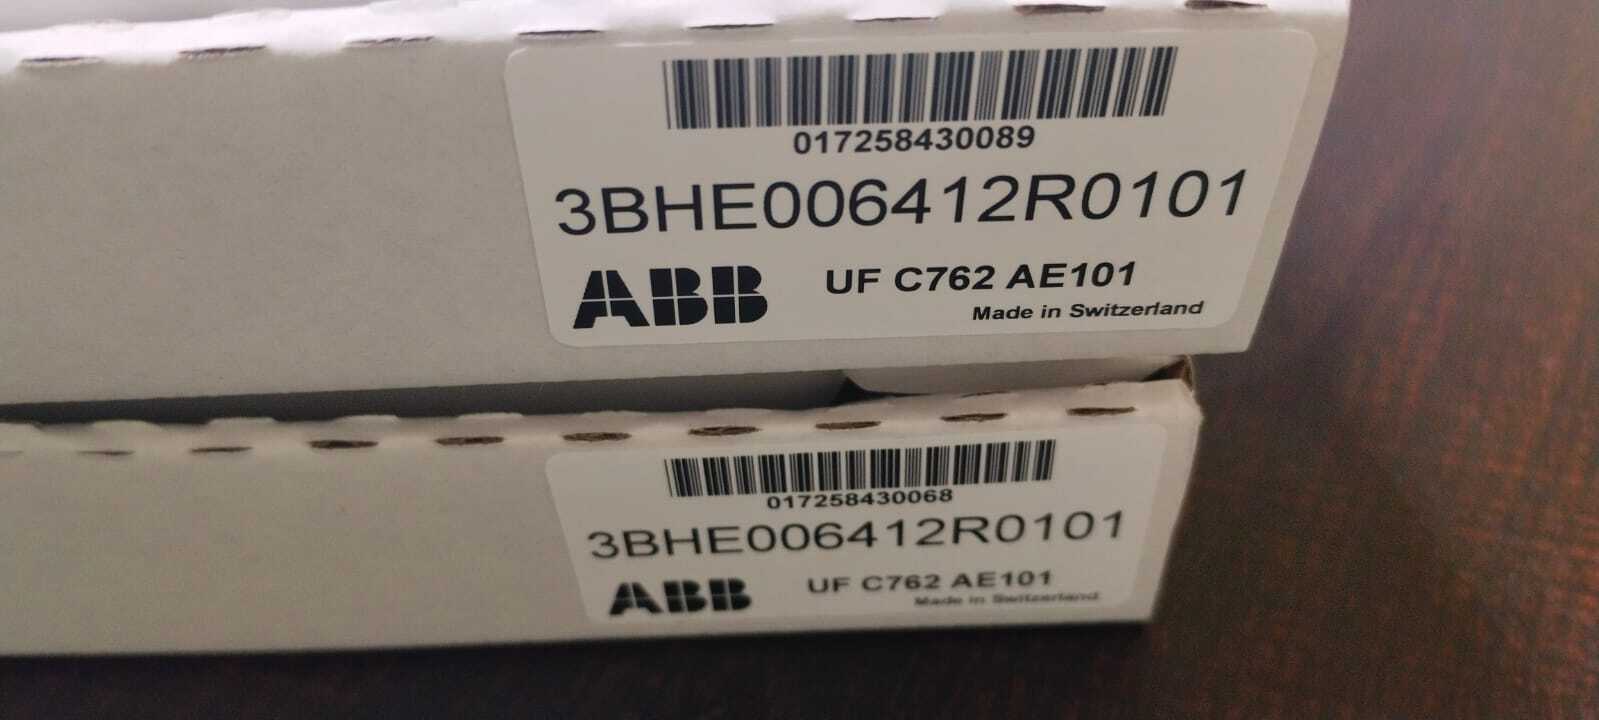 3BHE006412R0101-ABB programmable logic controller